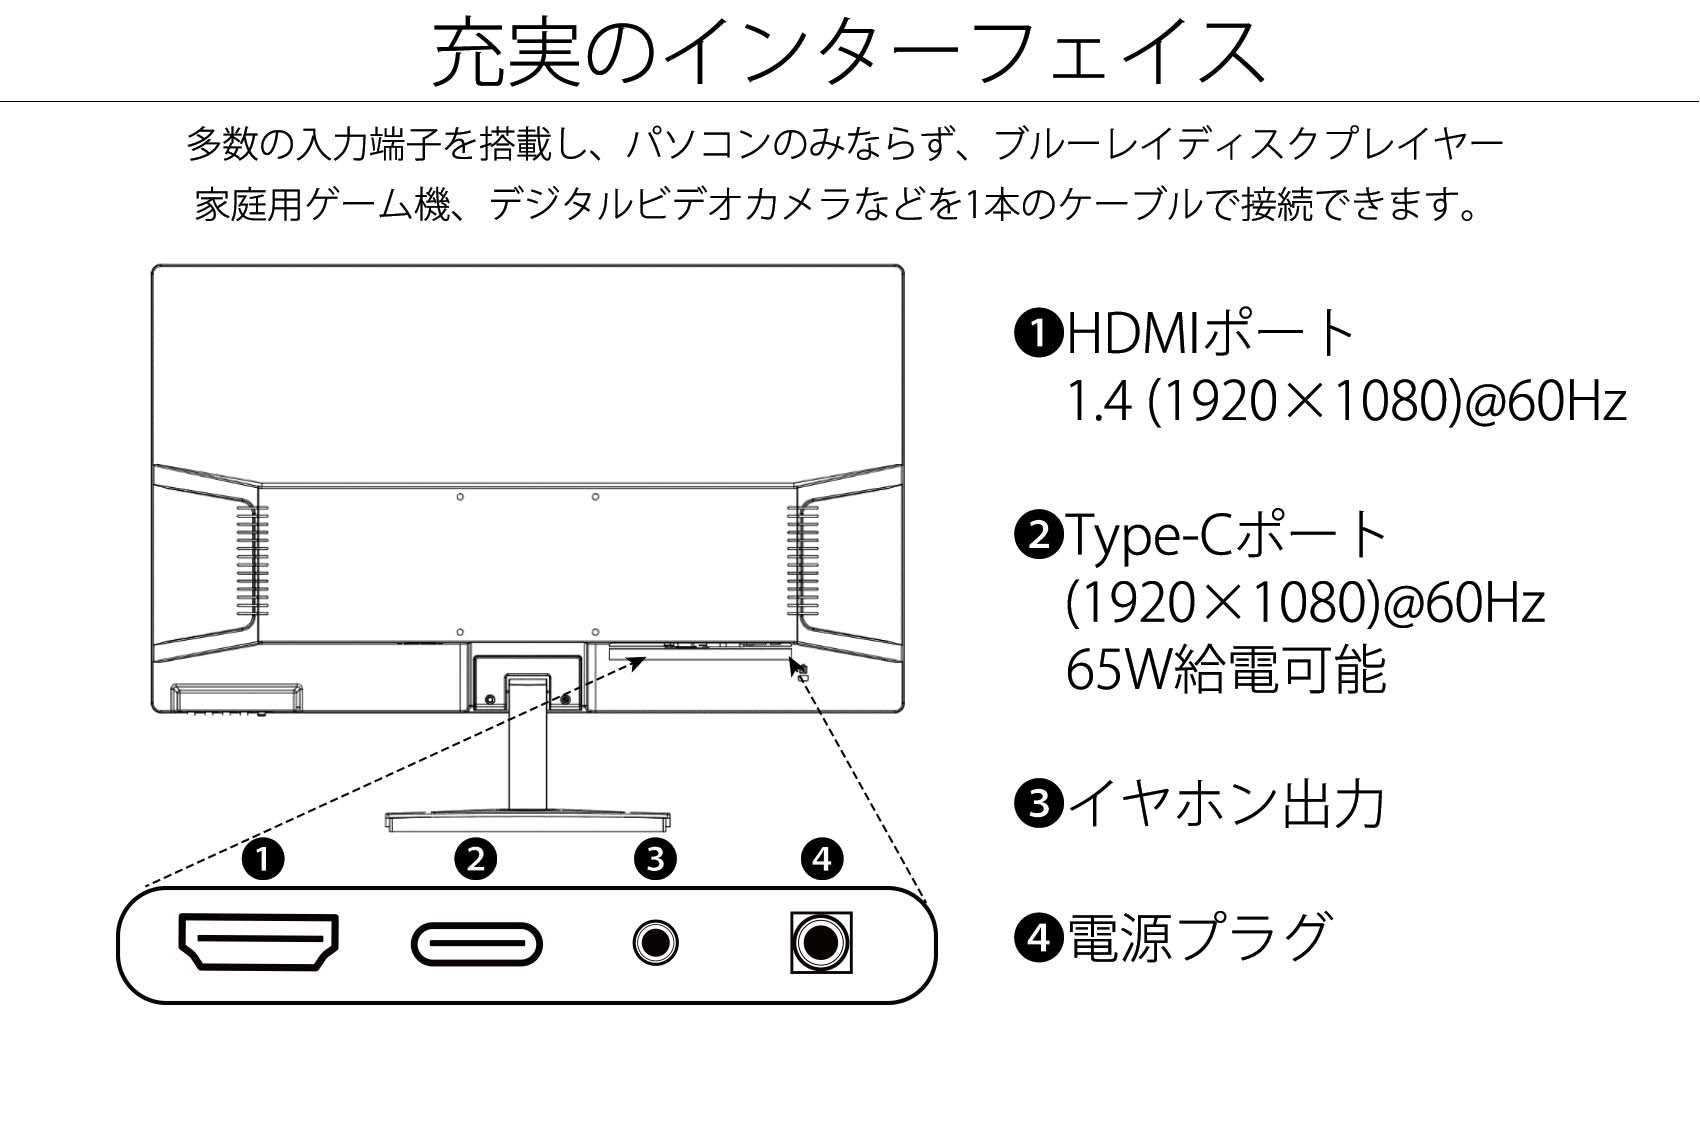 JAPANNEXT 23.6型 USB Type-C(65給電対応) フルHD(1920x1080